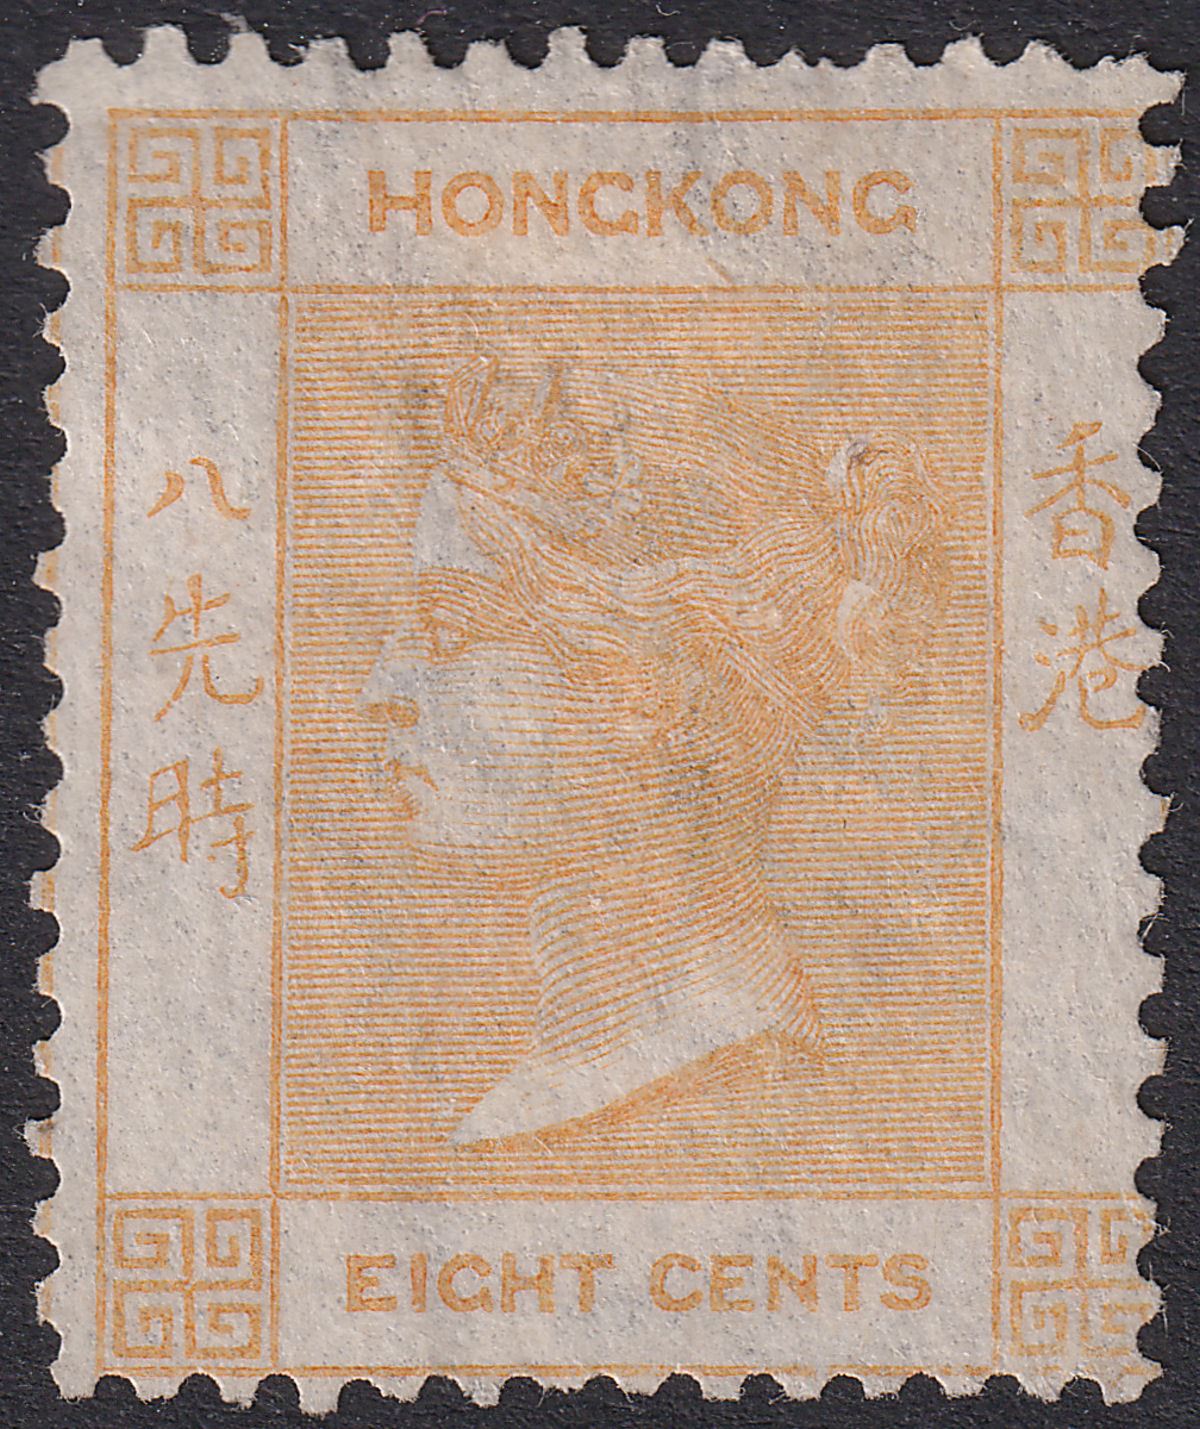 Hong Kong 1864 QV 8c Pale Dull Orange Unused SG11 cat £600 as mint